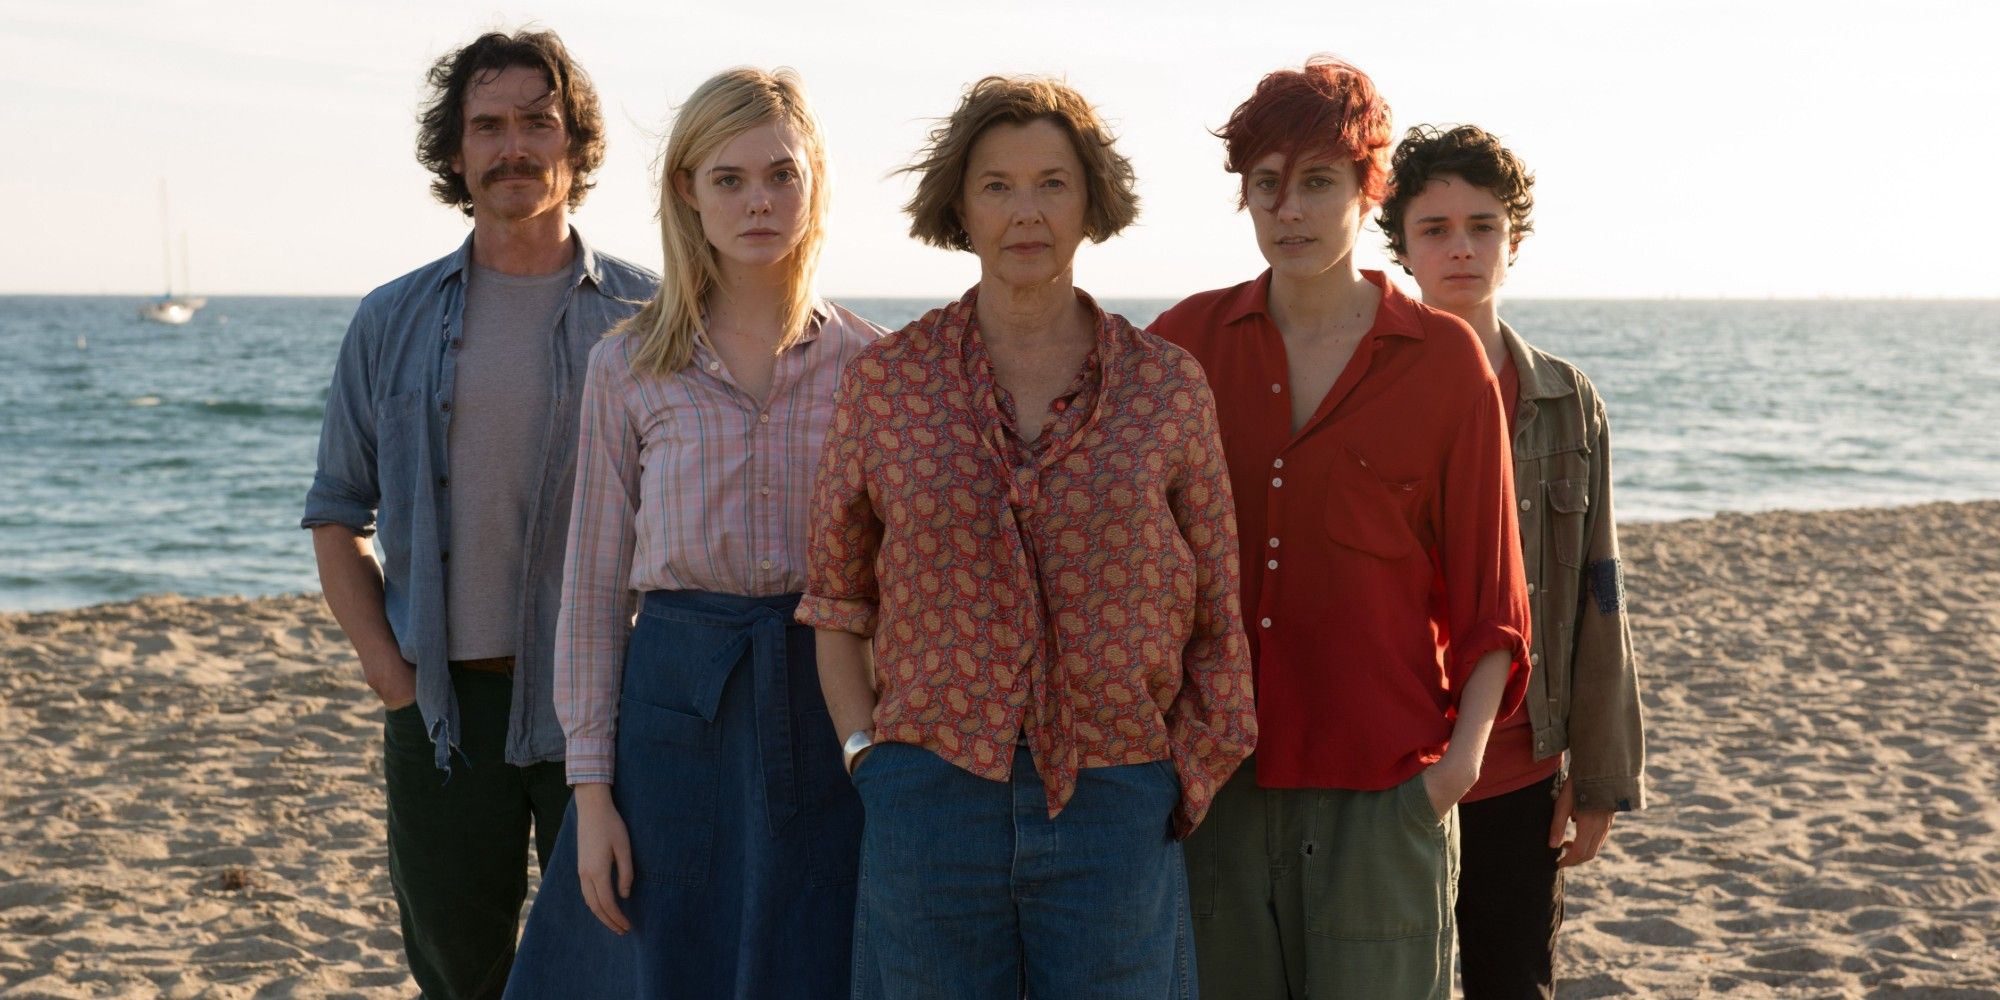 The main cast of 20th Century Women posing on the beach